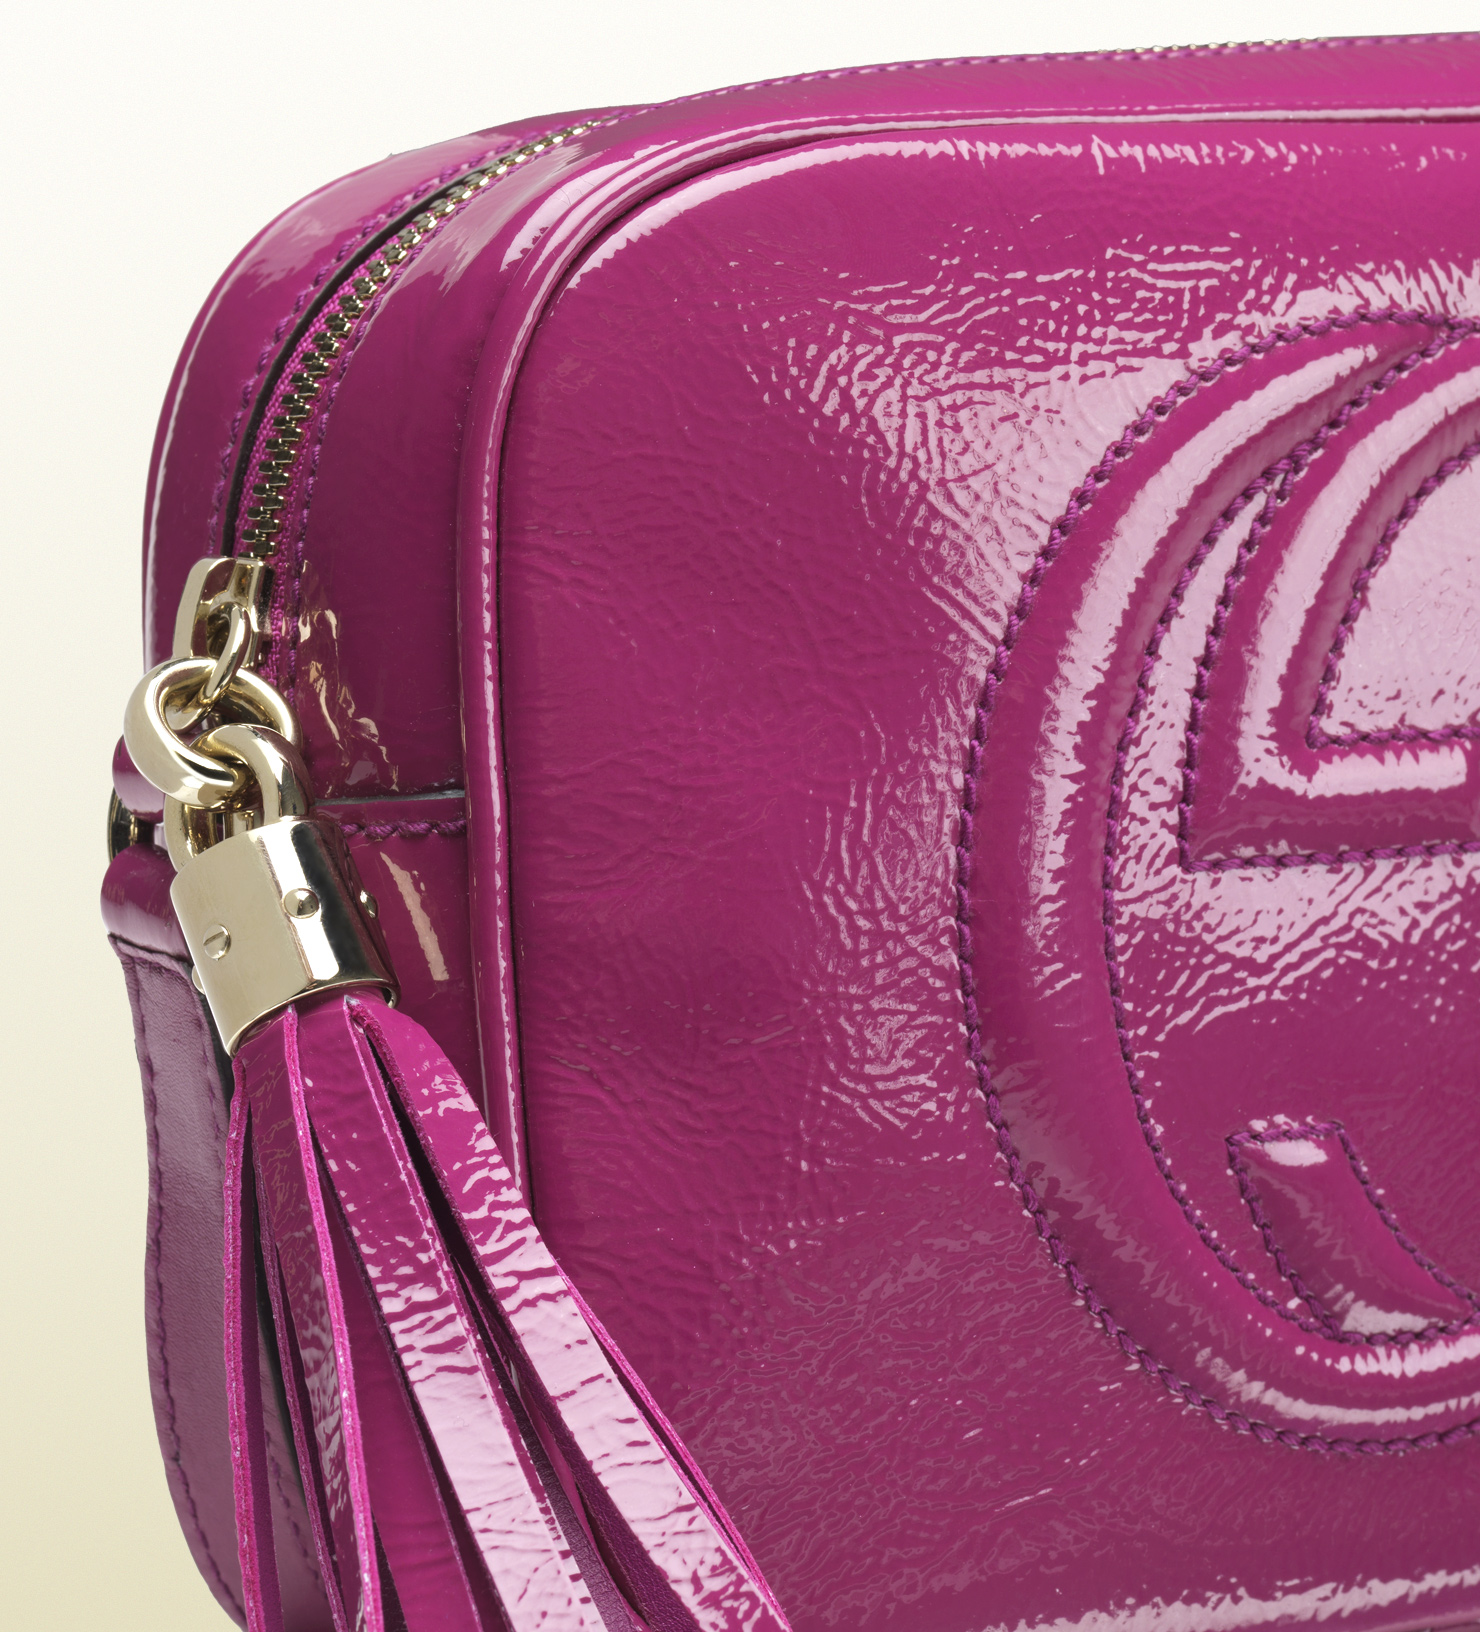 Gucci Soho Patent Leather Disco Bag in Fuchsia (Purple) - Lyst